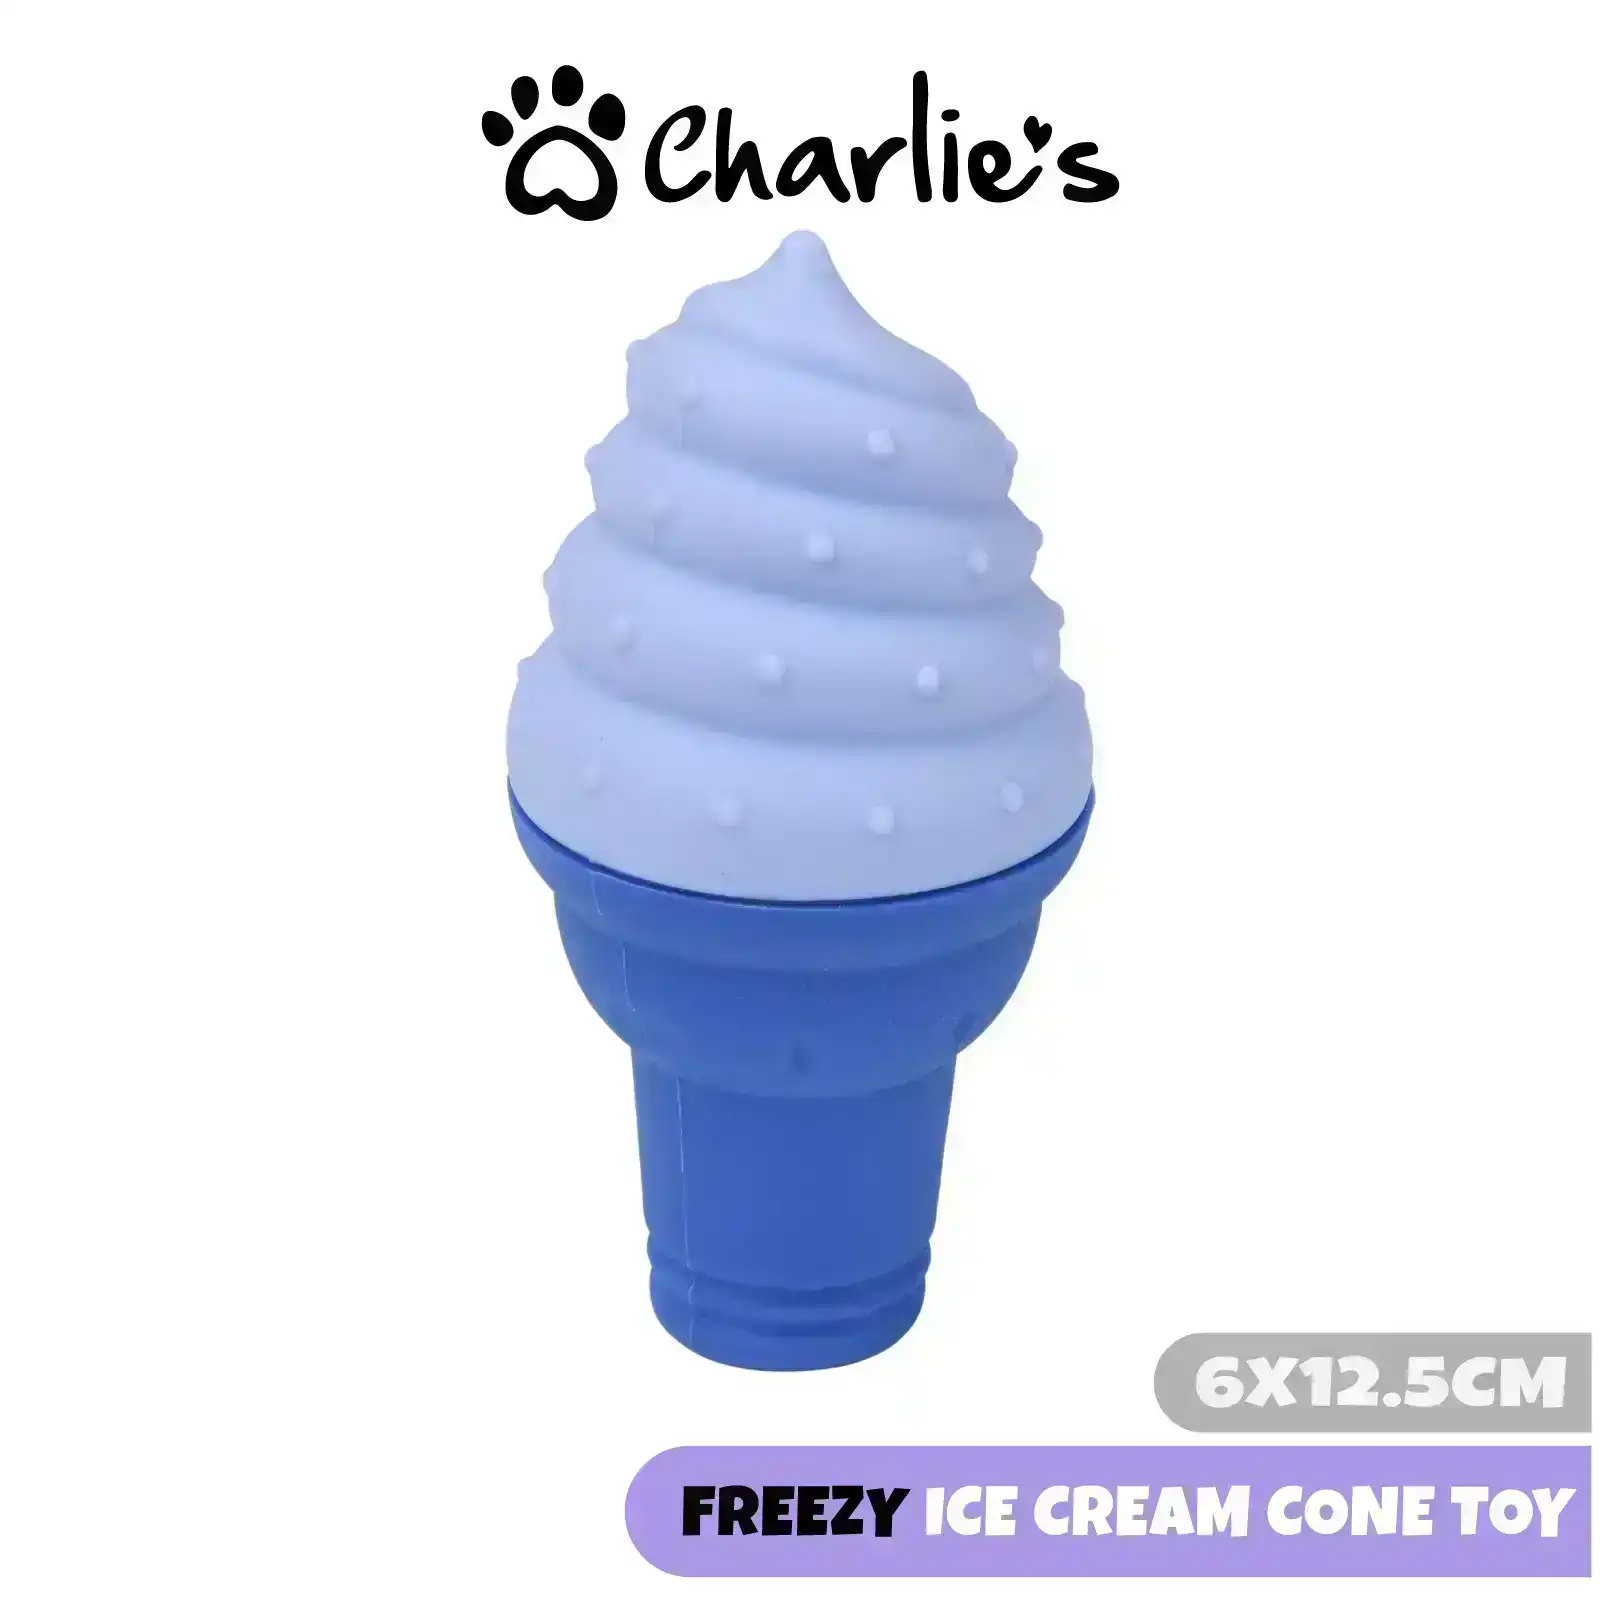 Charlie's Freezy Ice Cream Cone Toy Blue 6x12.5cm